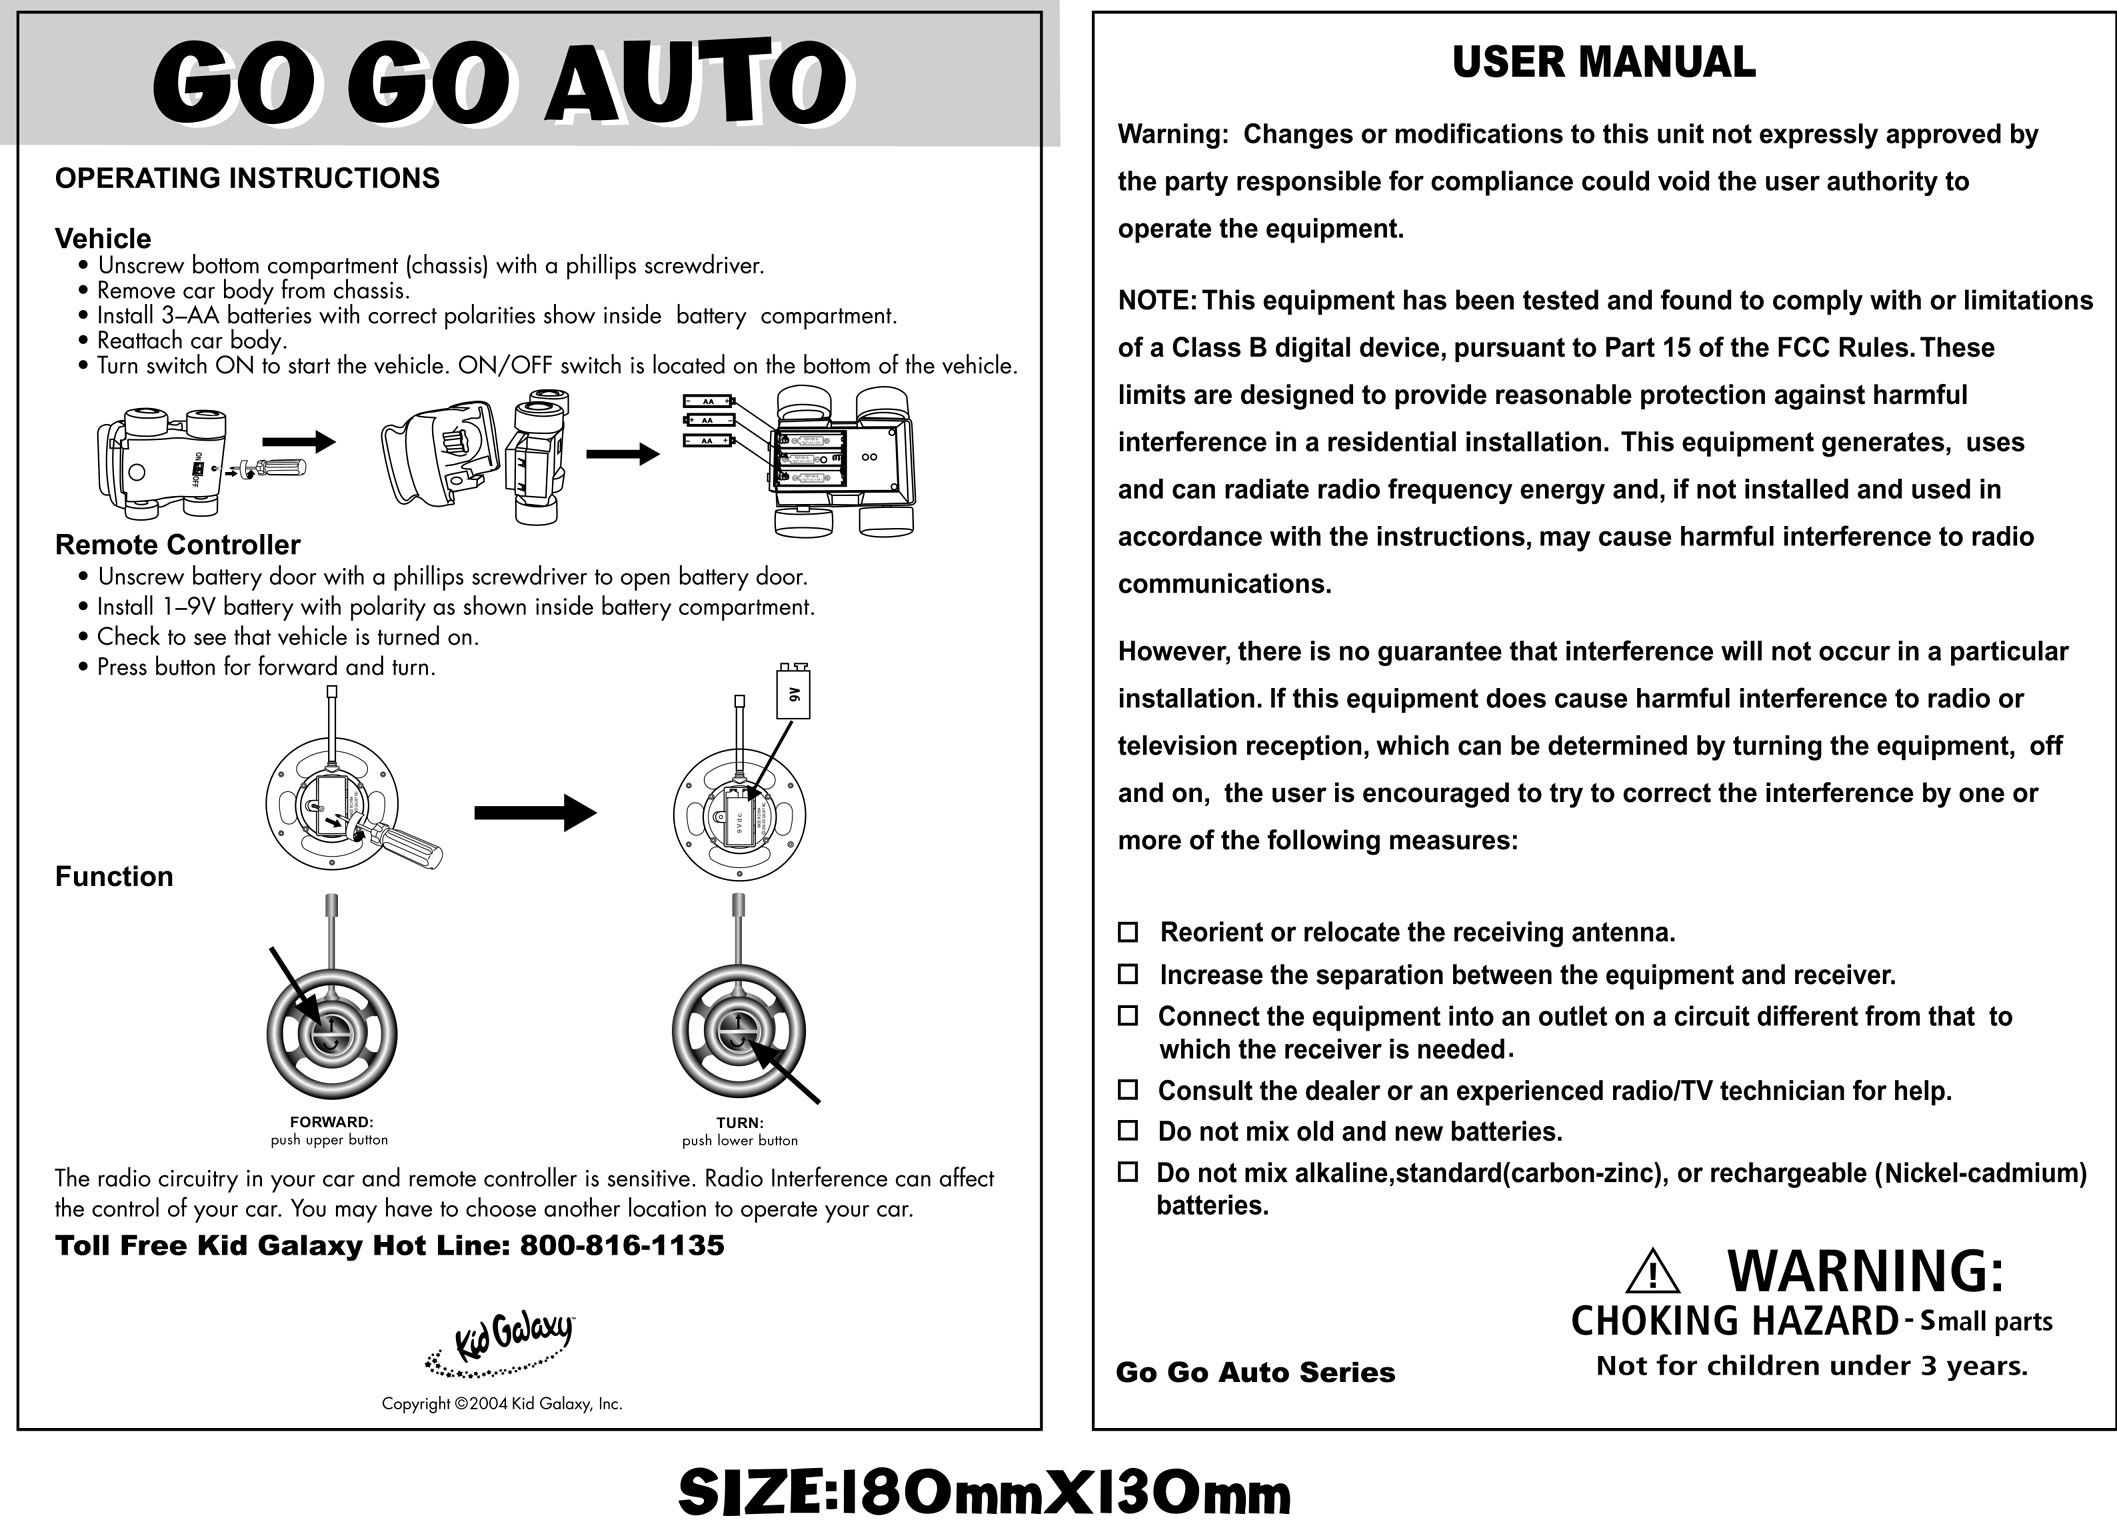 GO GO AUTO User Manual